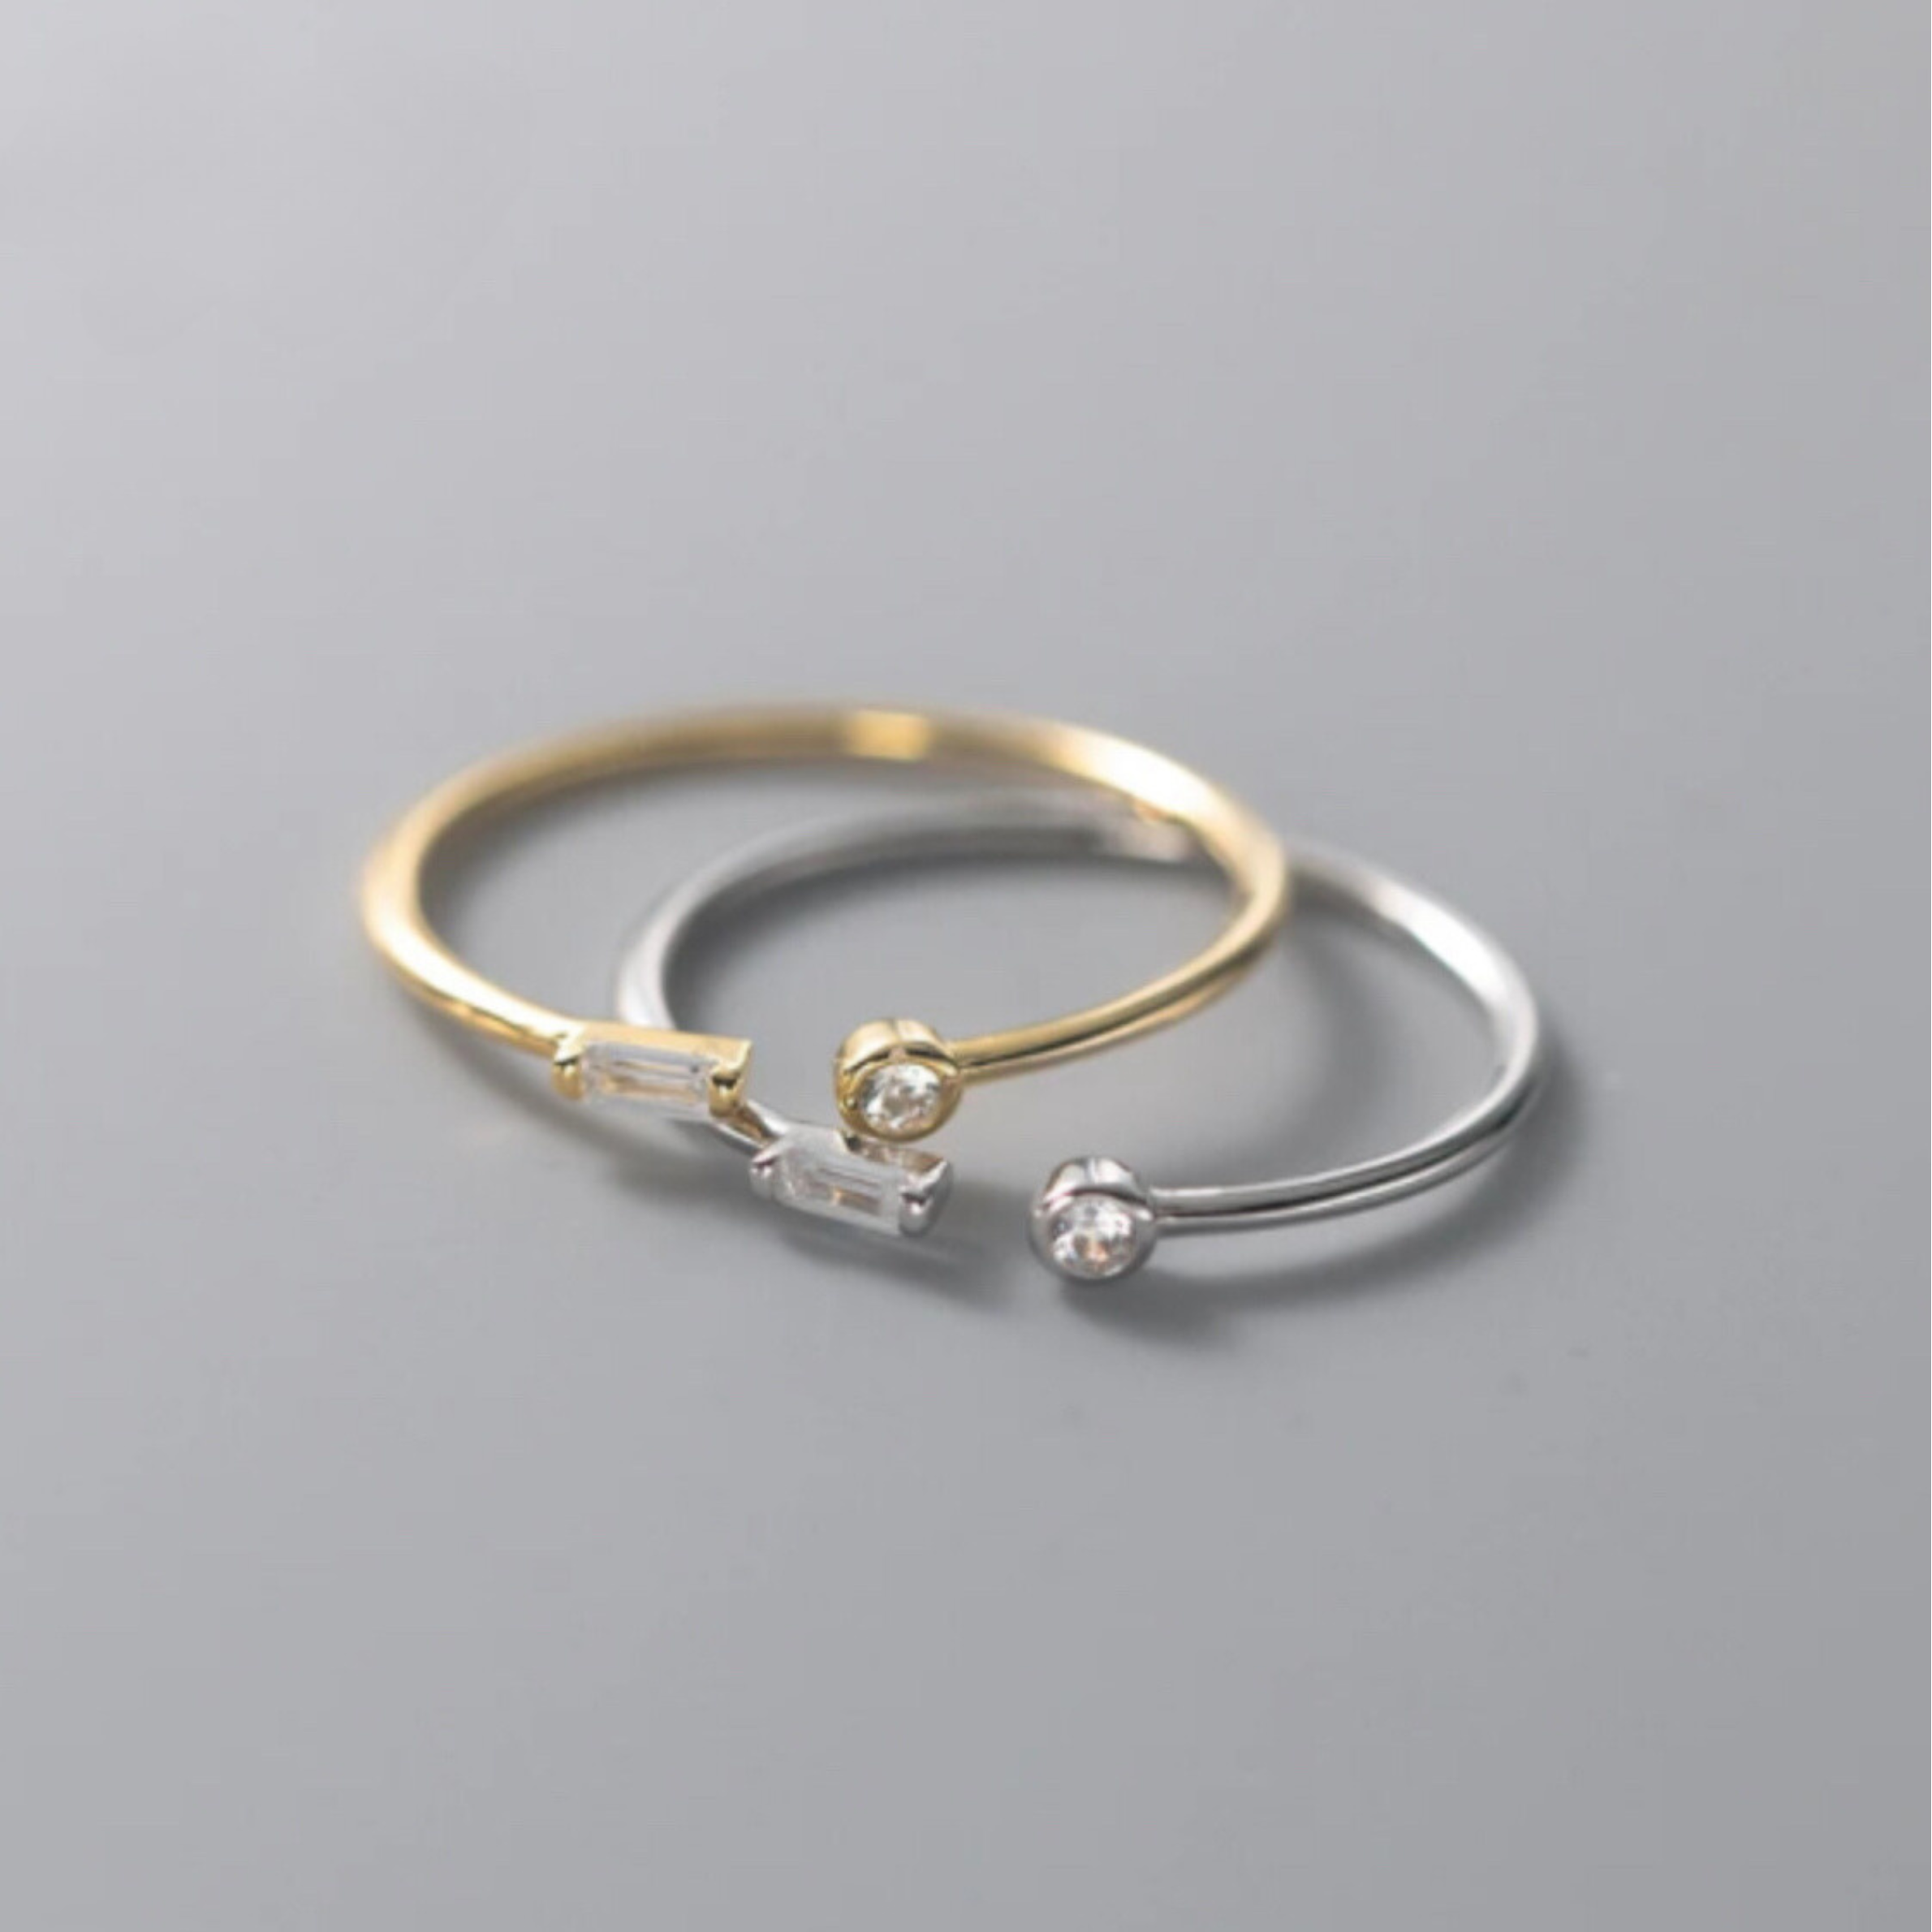 Adjustable 14K Gold Plated Geometric Cubic Zirconia Ring: Dainty Minimalist Charm